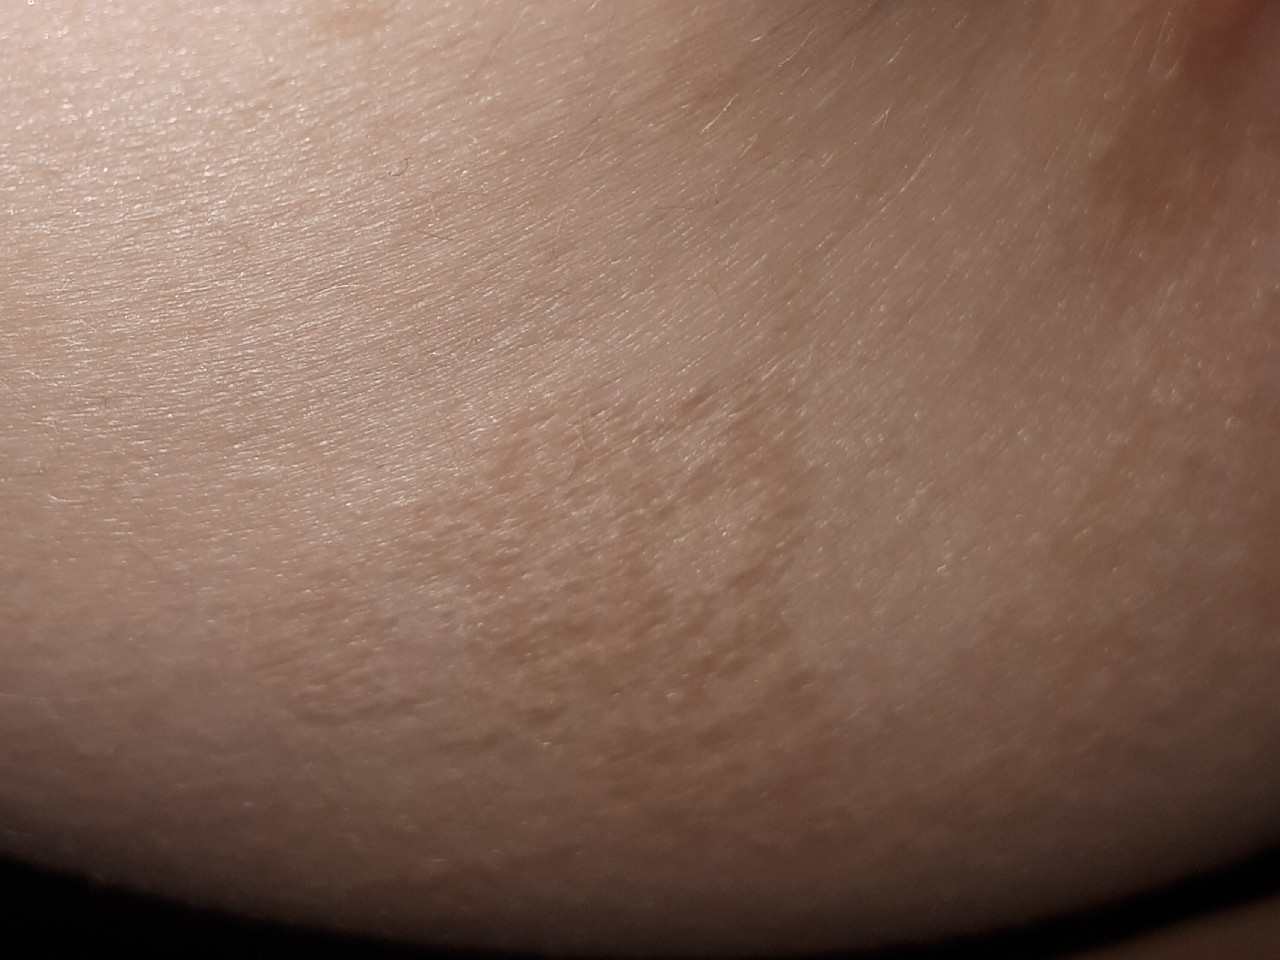 светло коричневые пятна на груди у женщин фото 29